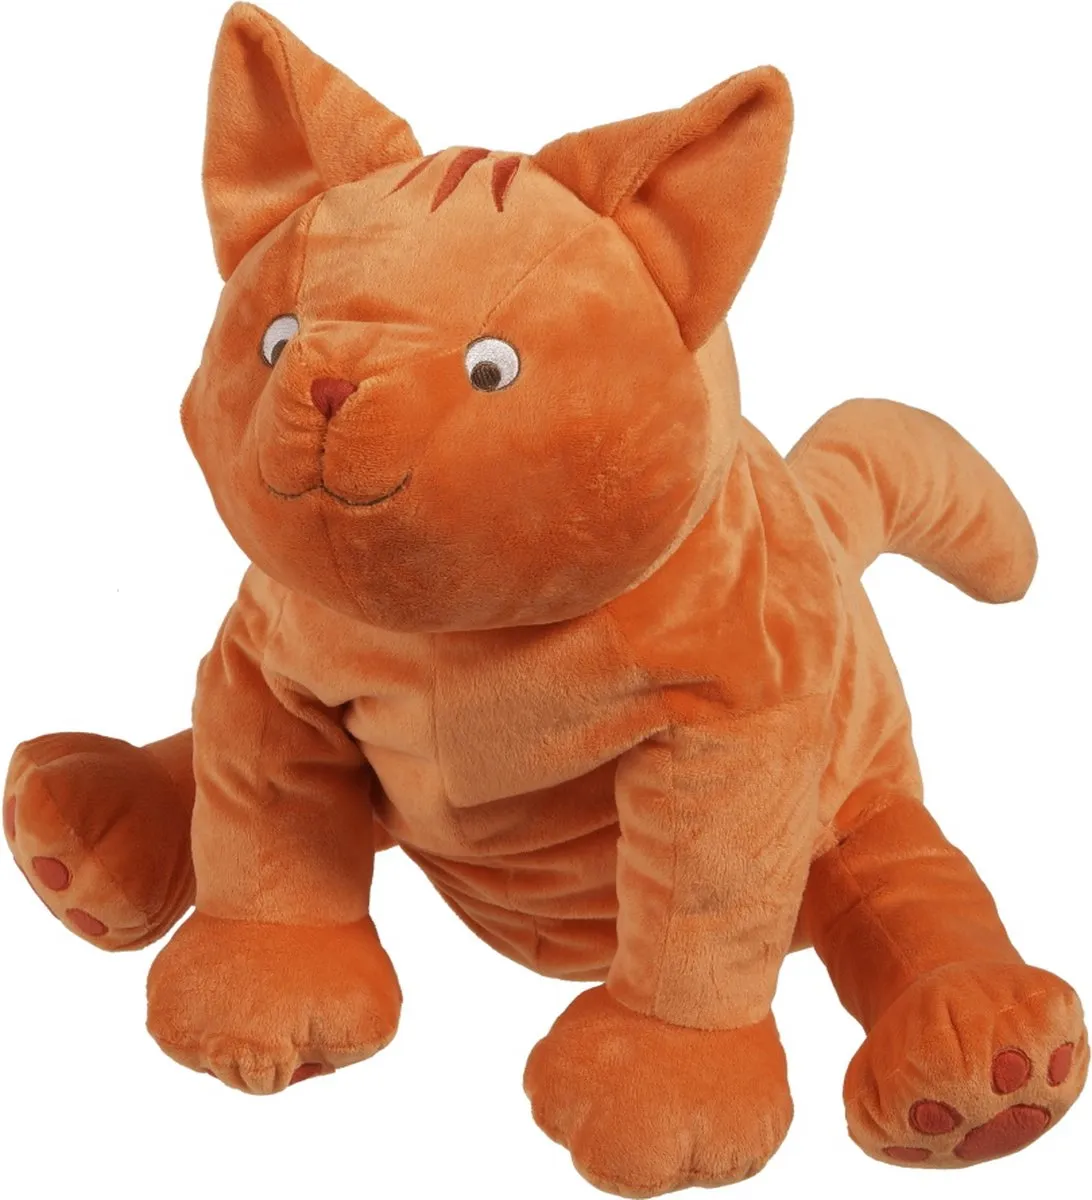 Happy Horse Dikkie Dik Knuffel 30cm - Oranje - Baby knuffel speelgoed